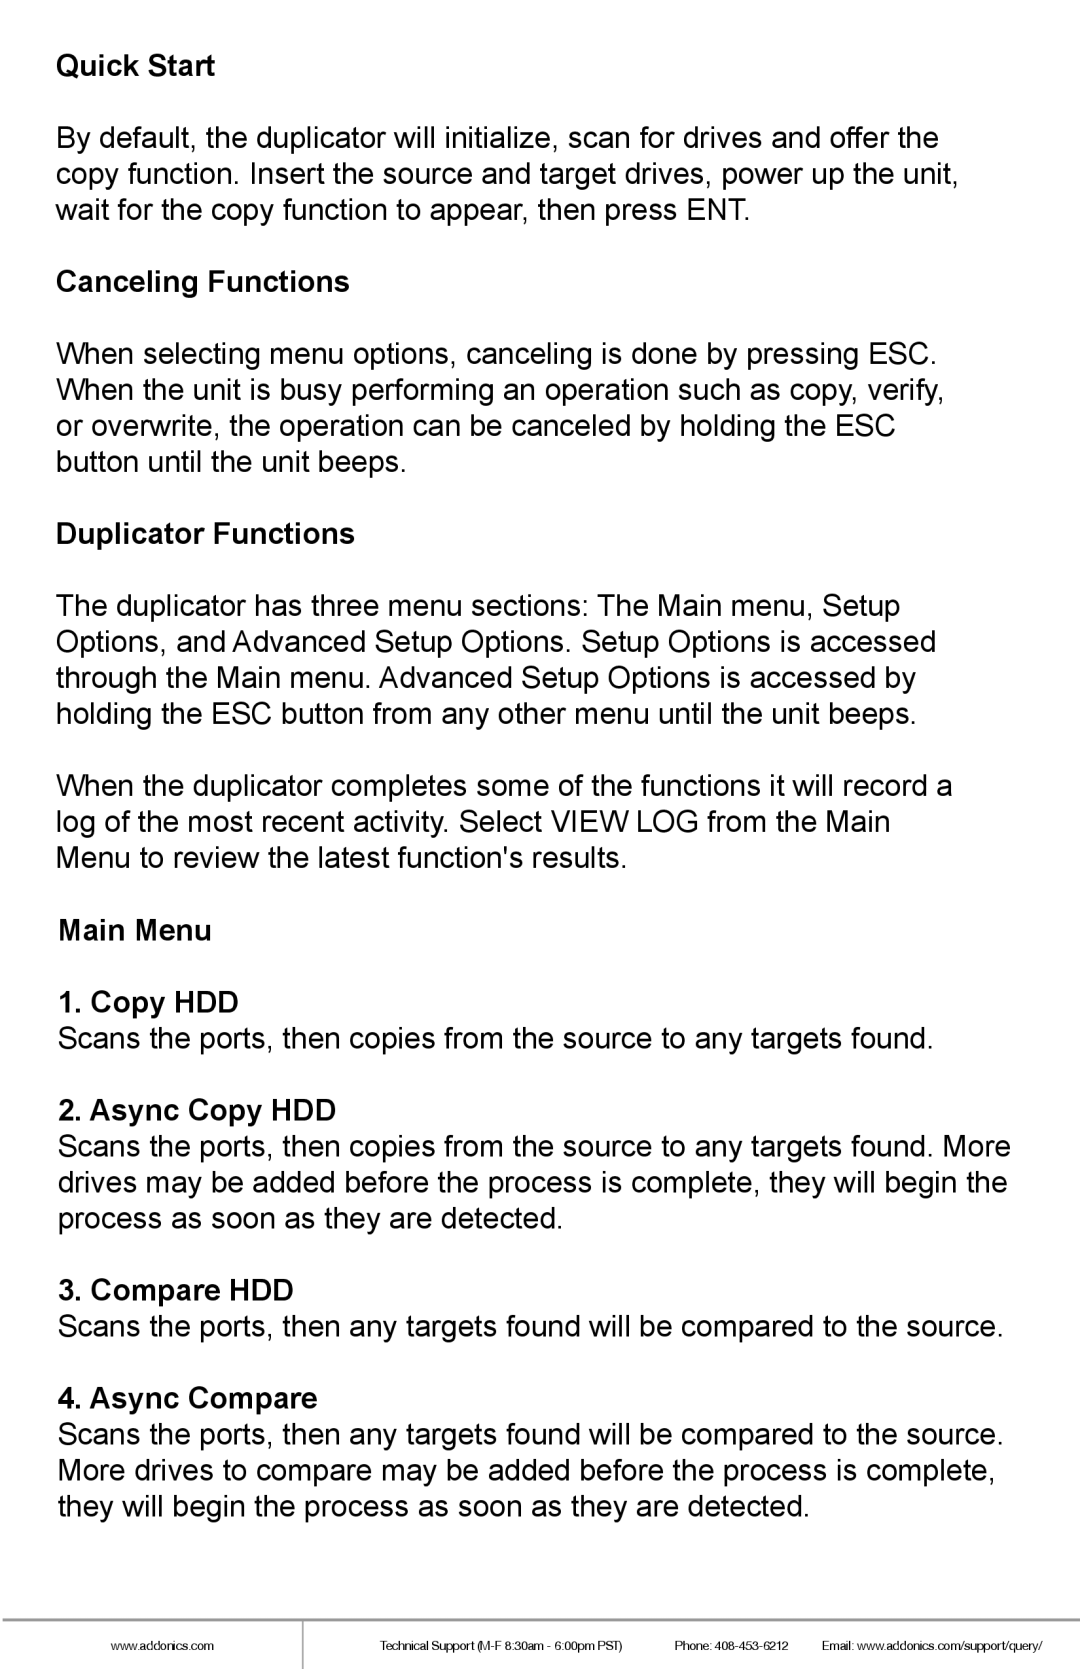 Addonics Technologies HD9SITDRHS manual Quick Start, Canceling Functions, Duplicator Functions, Main Menu 1. Copy HDD 